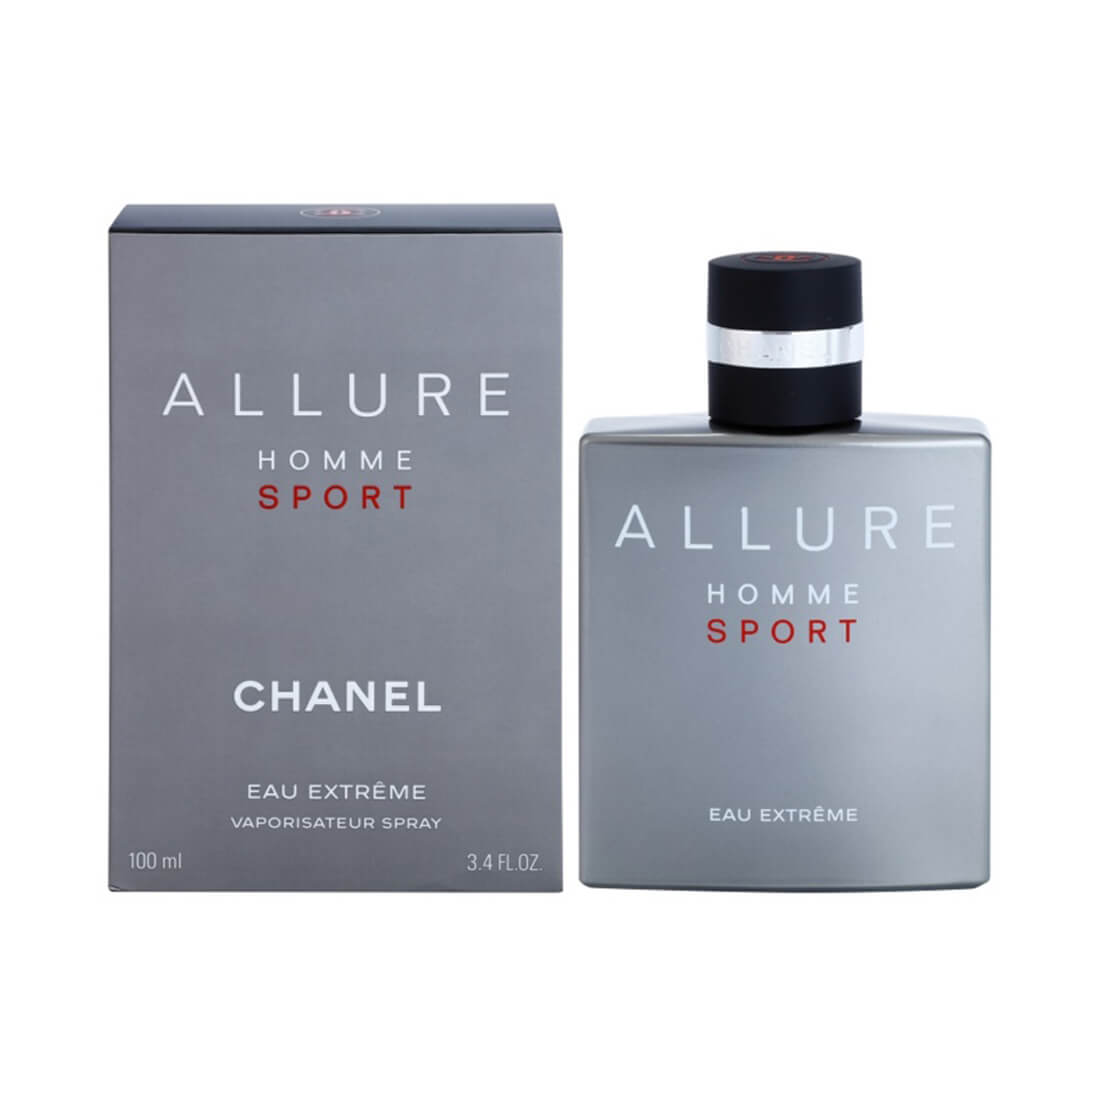 CHANEL Allure Homme Sport Eau de Toilette Spray, 50ml at John